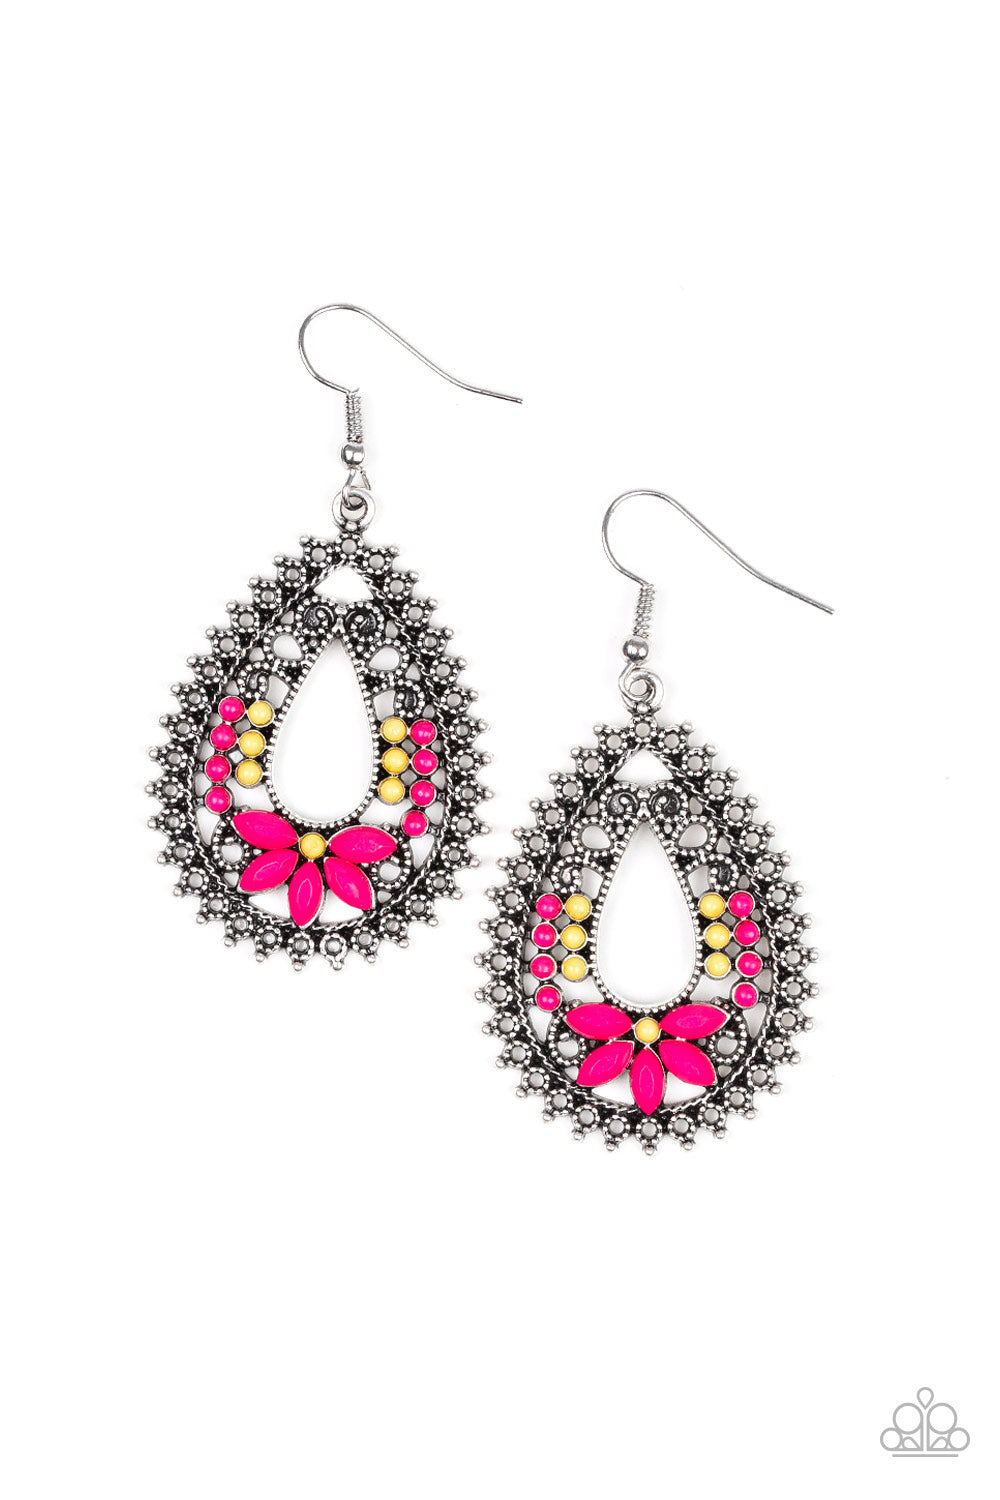 Atta-GALA Pink Paparazzi Earrings Cashmere Pink Jewels - Cashmere Pink Jewels & Accessories, Cashmere Pink Jewels & Accessories - Paparazzi